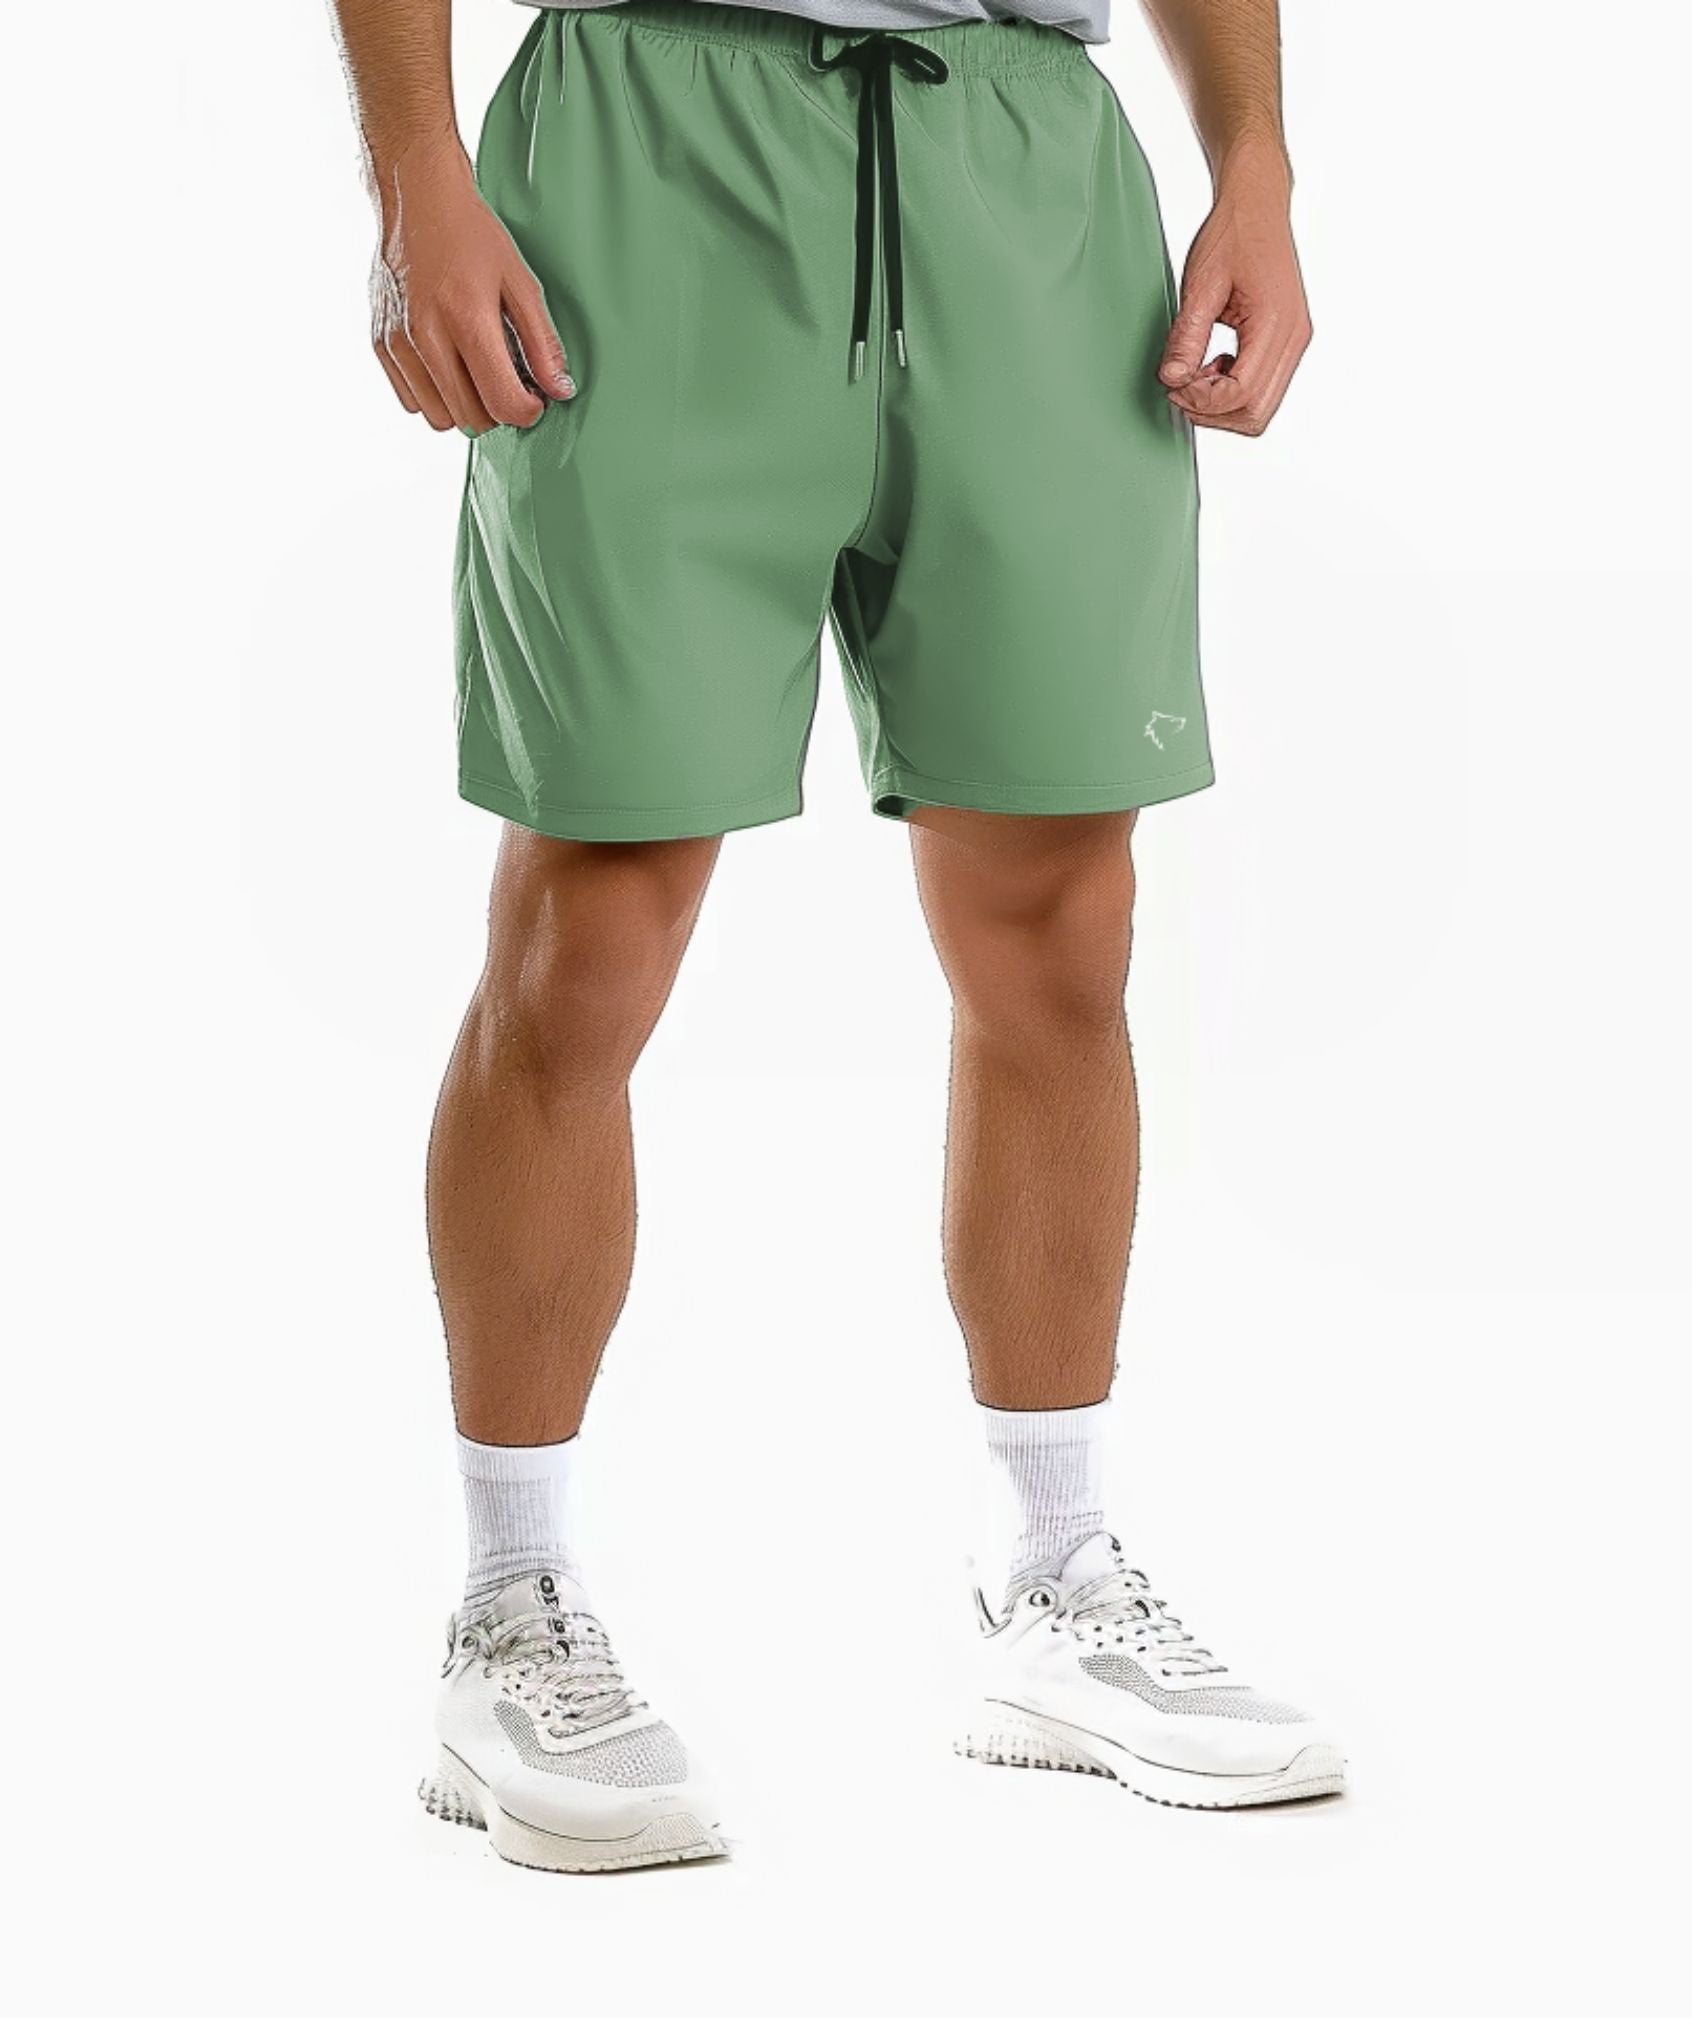 Apex™ green Pinnacle Shorts front view - eco-friendly and durable shorts